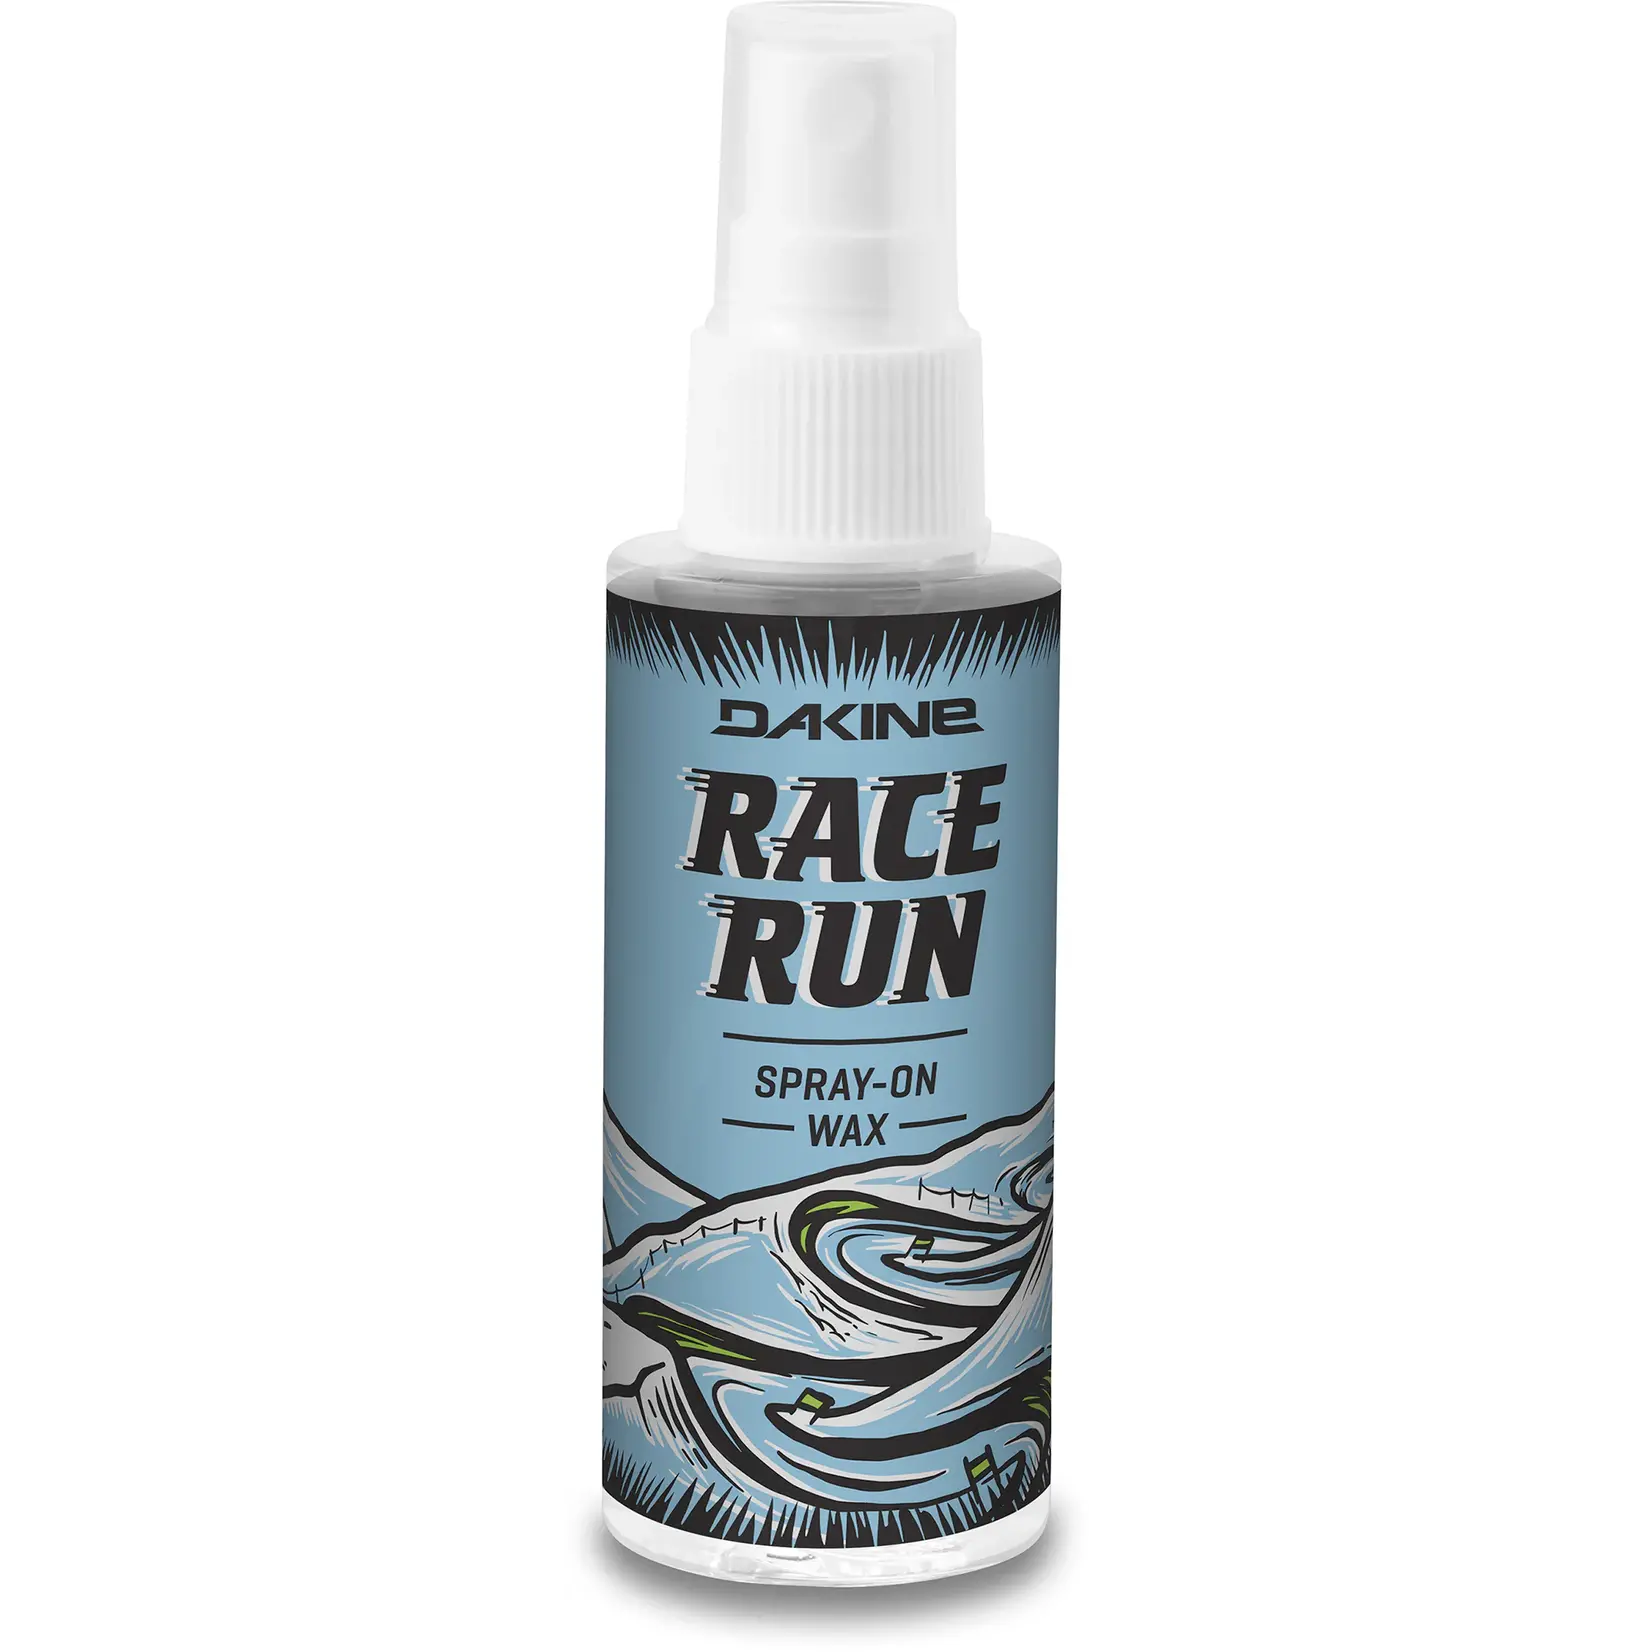 Dakine NEW Dakine Race Run Spray-on Wax (2oz/60mL)